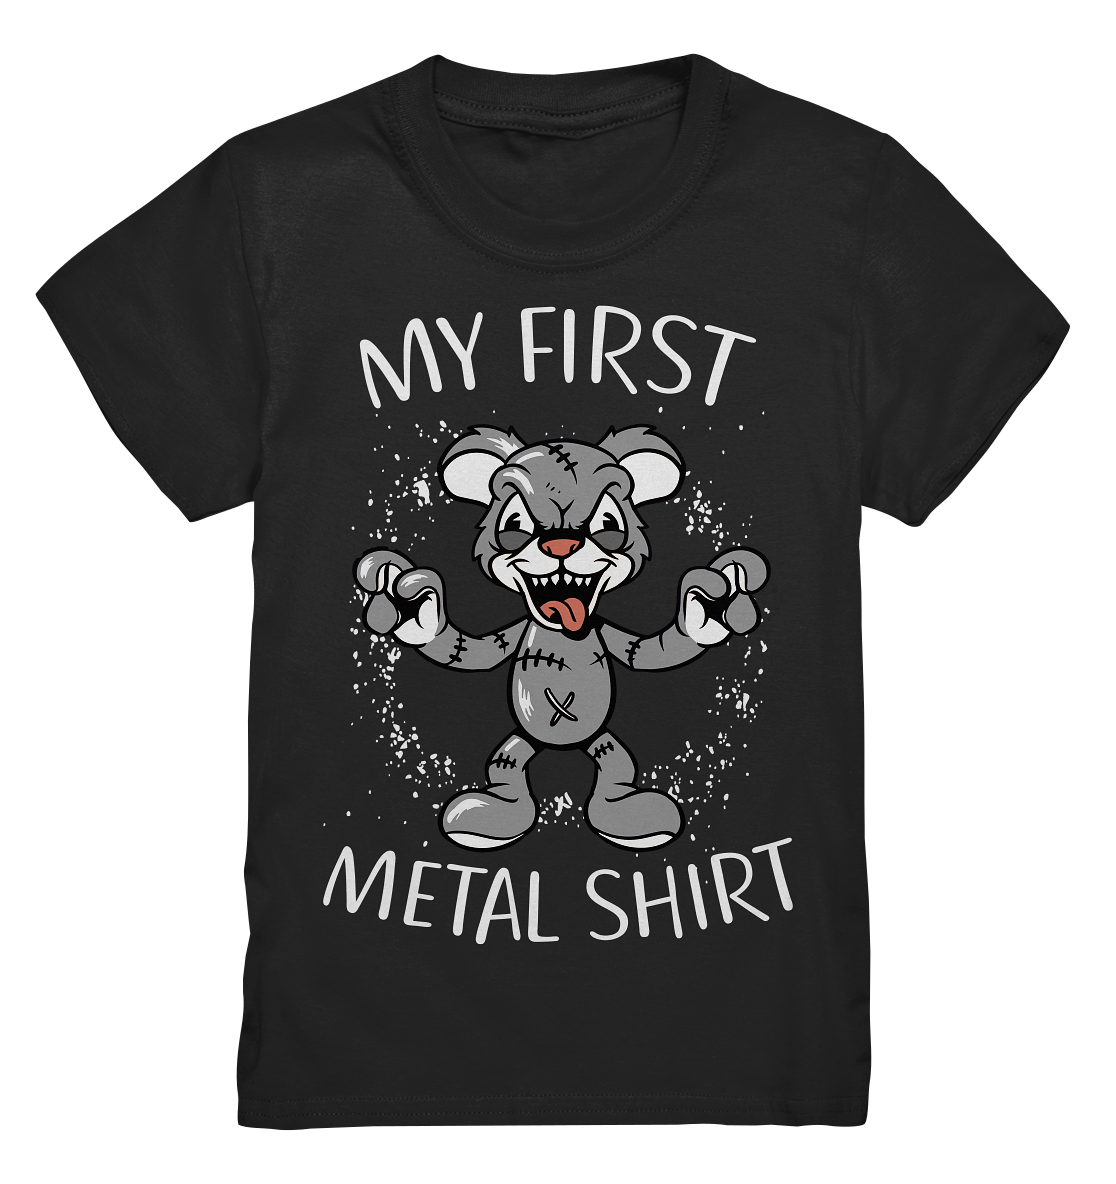 My First Metal Shirt - Kids Premium Shirt